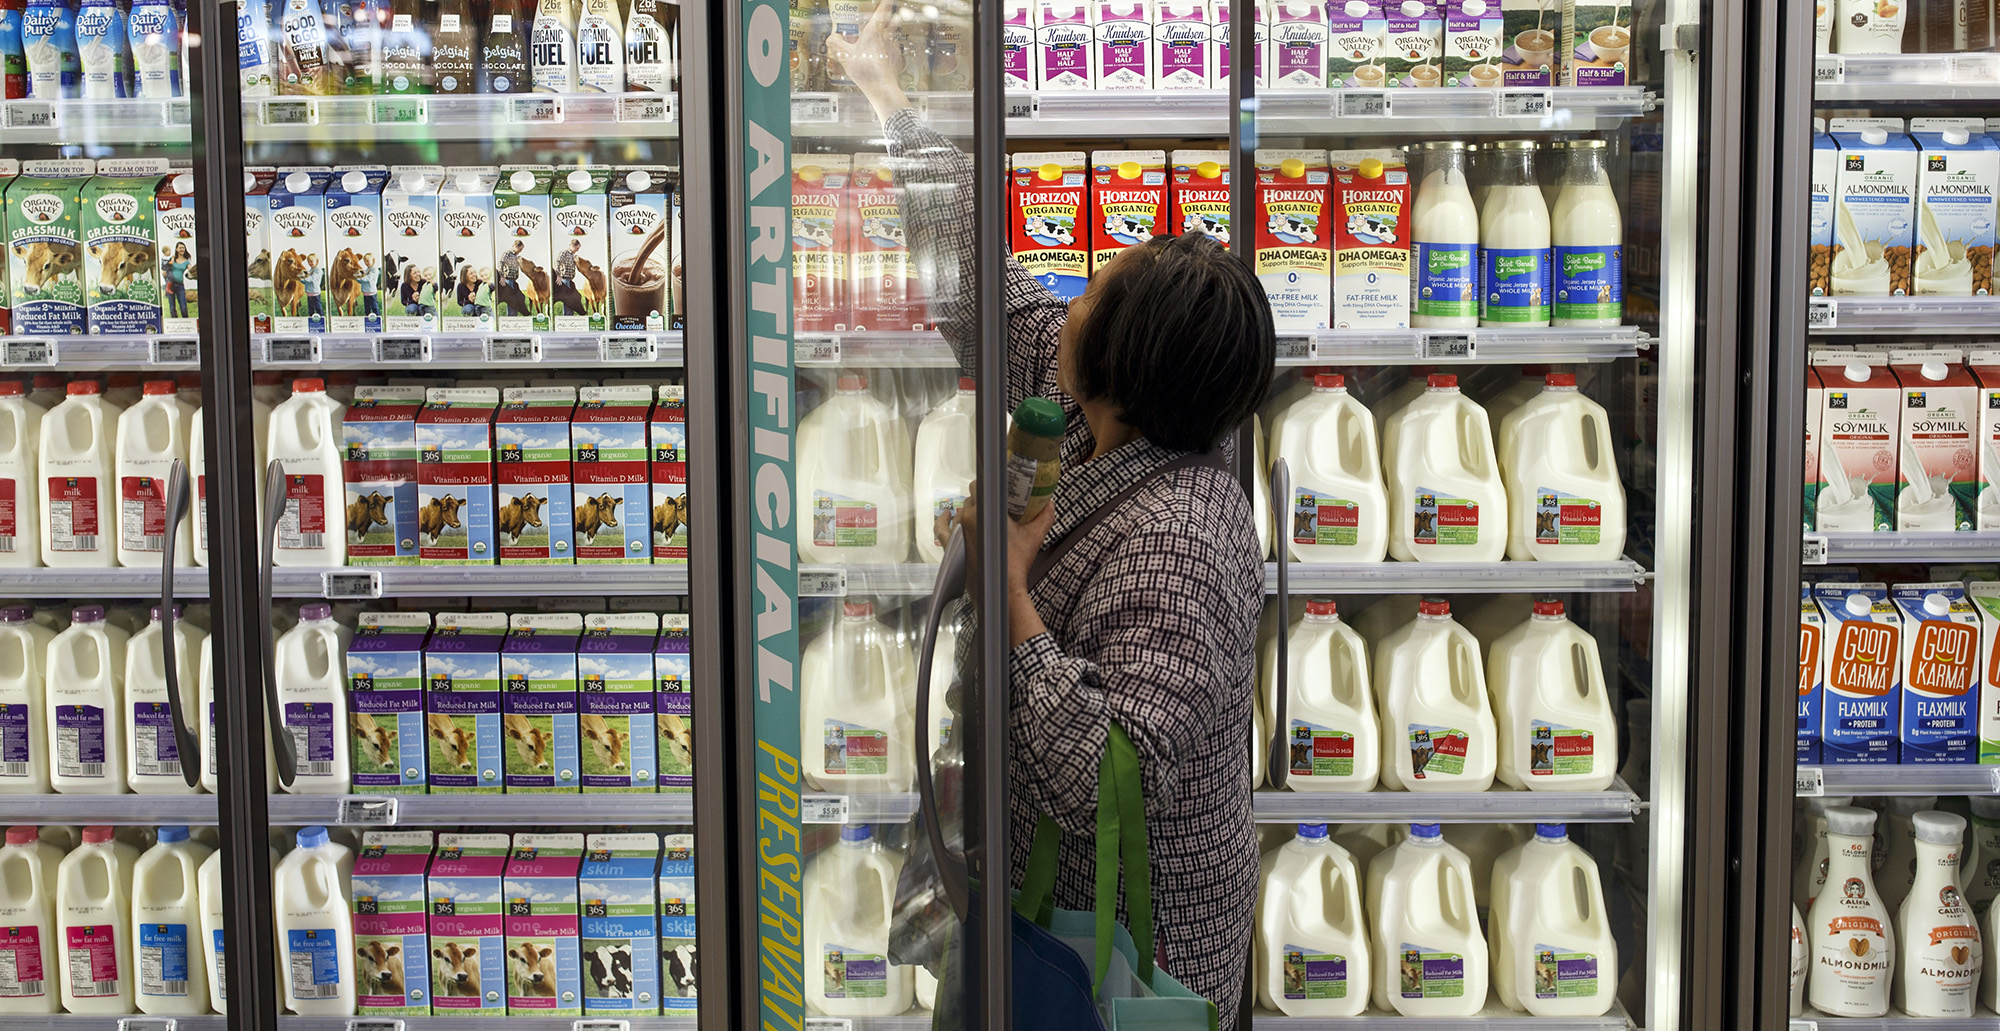 Milk Delivery Service Regains Popularity